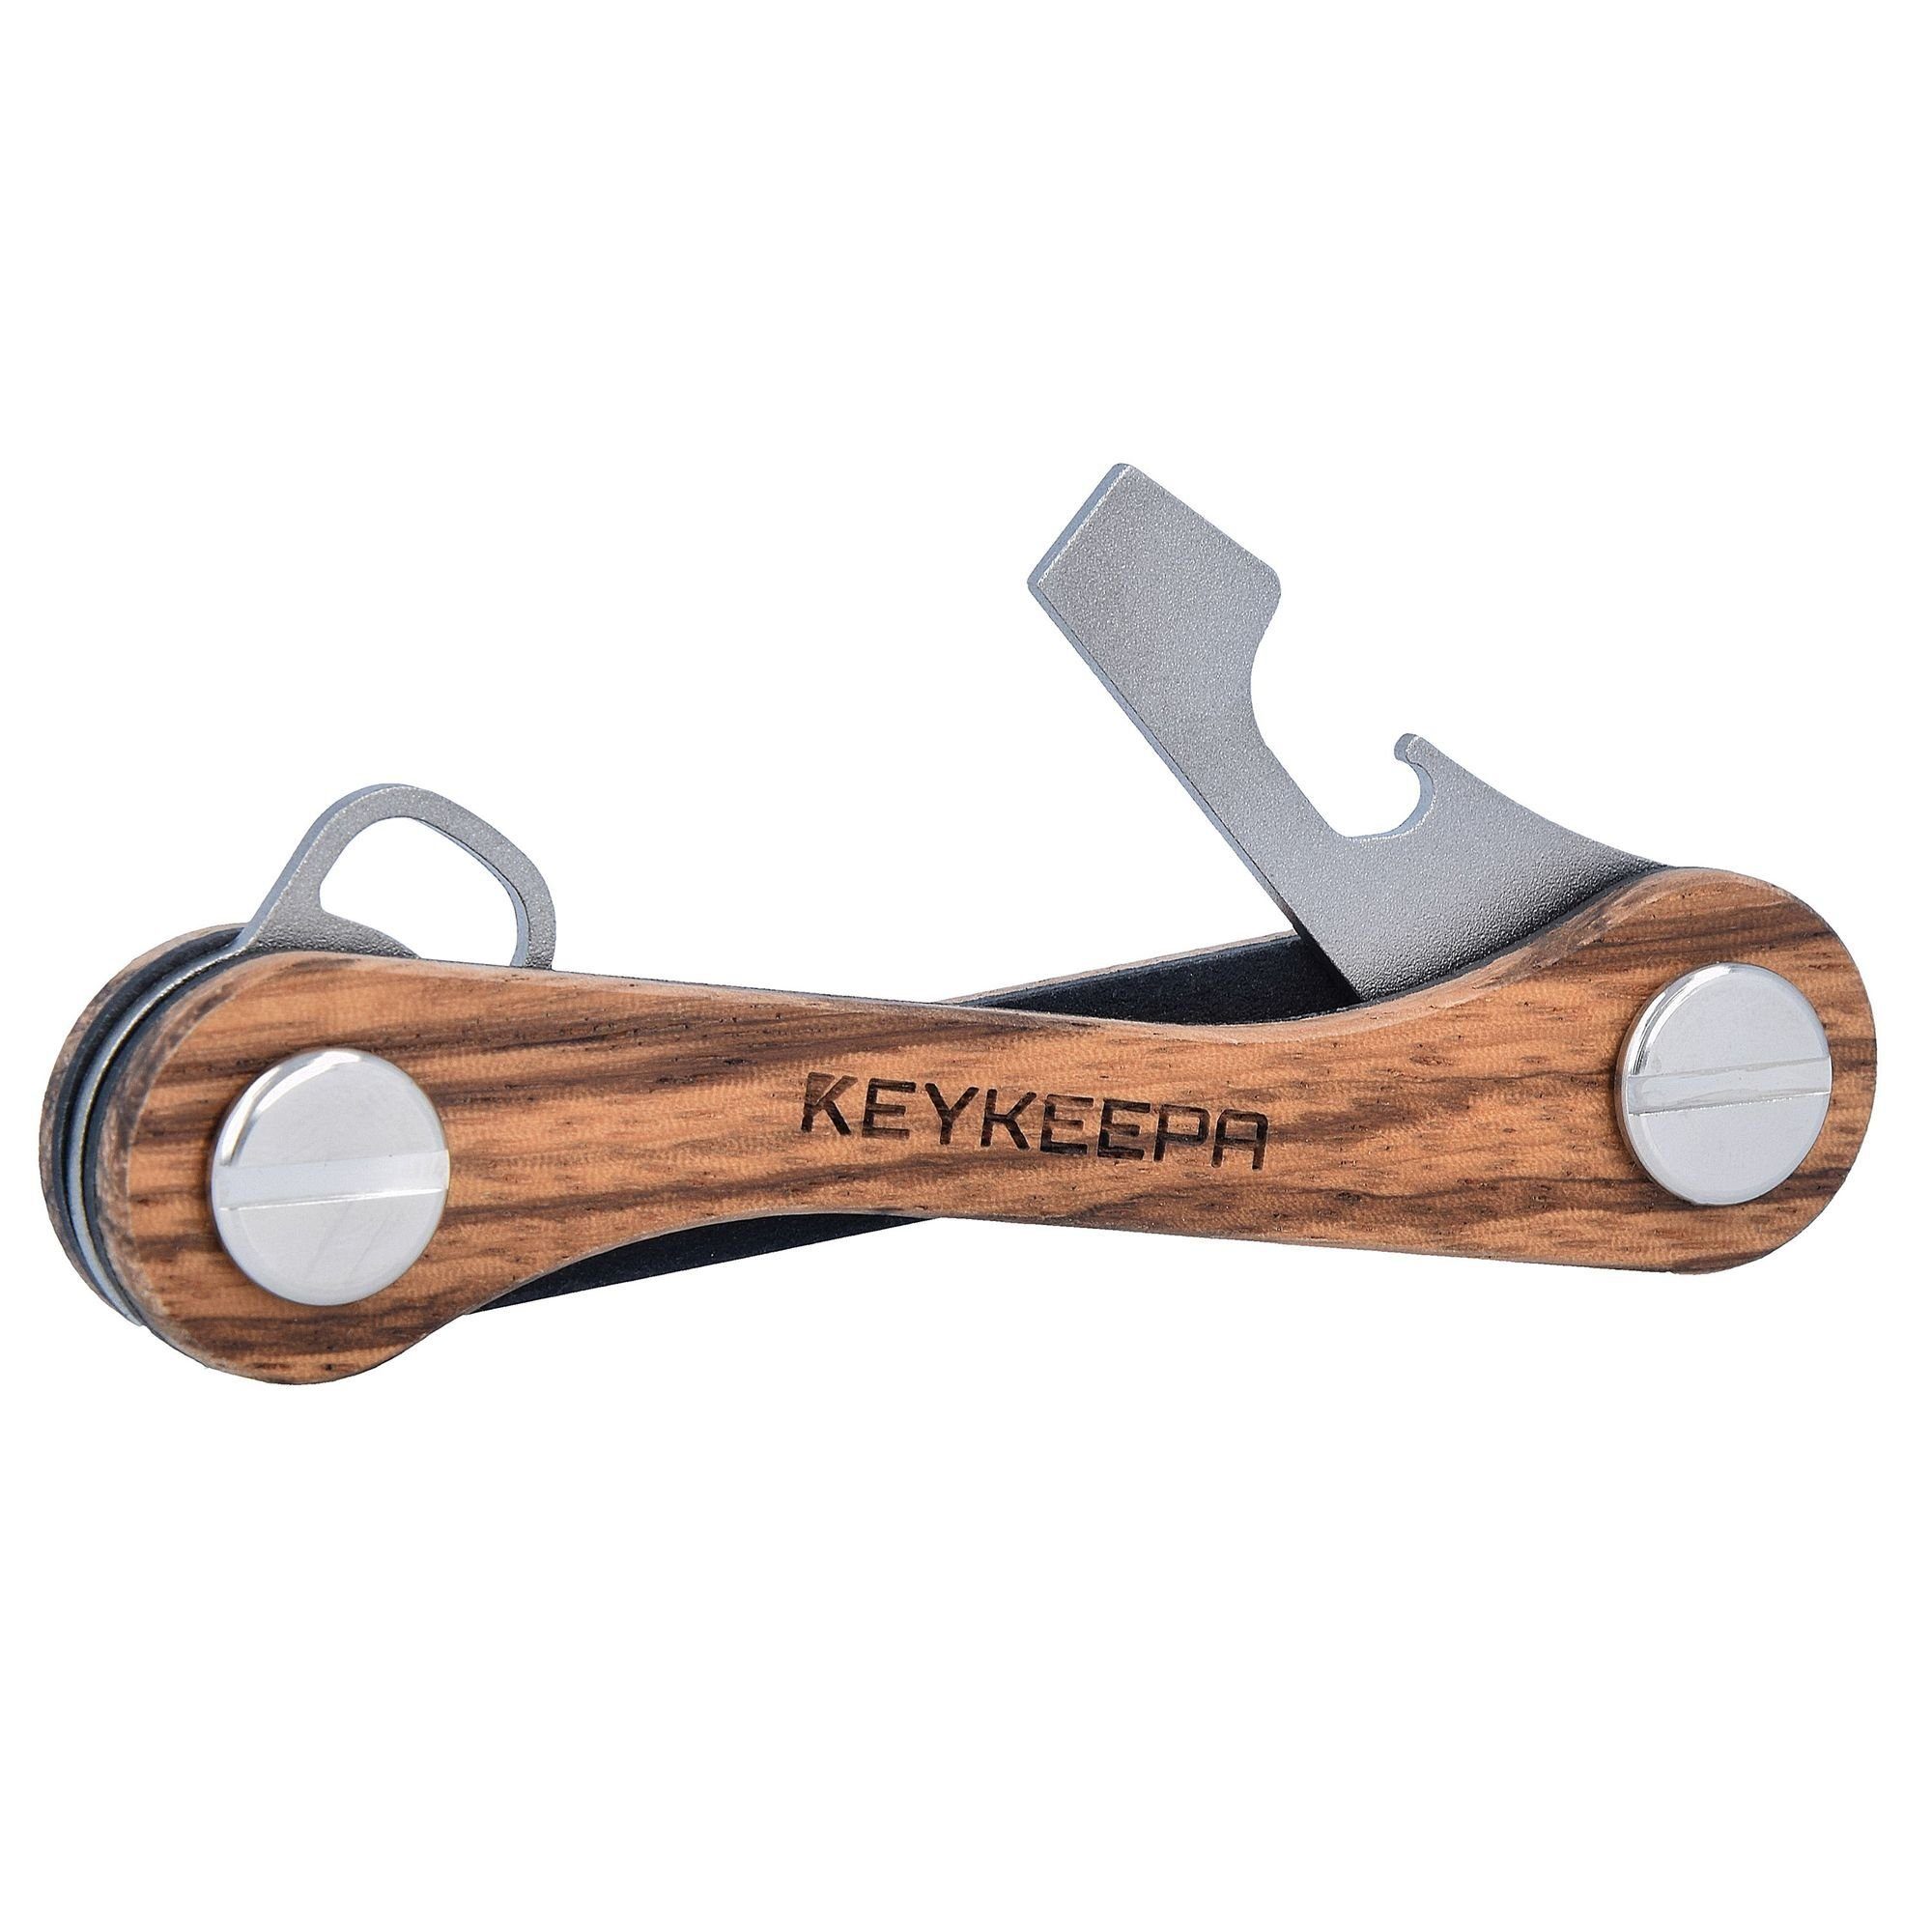 Keykeepa Schlüsseltasche Wood, Holz zebrano